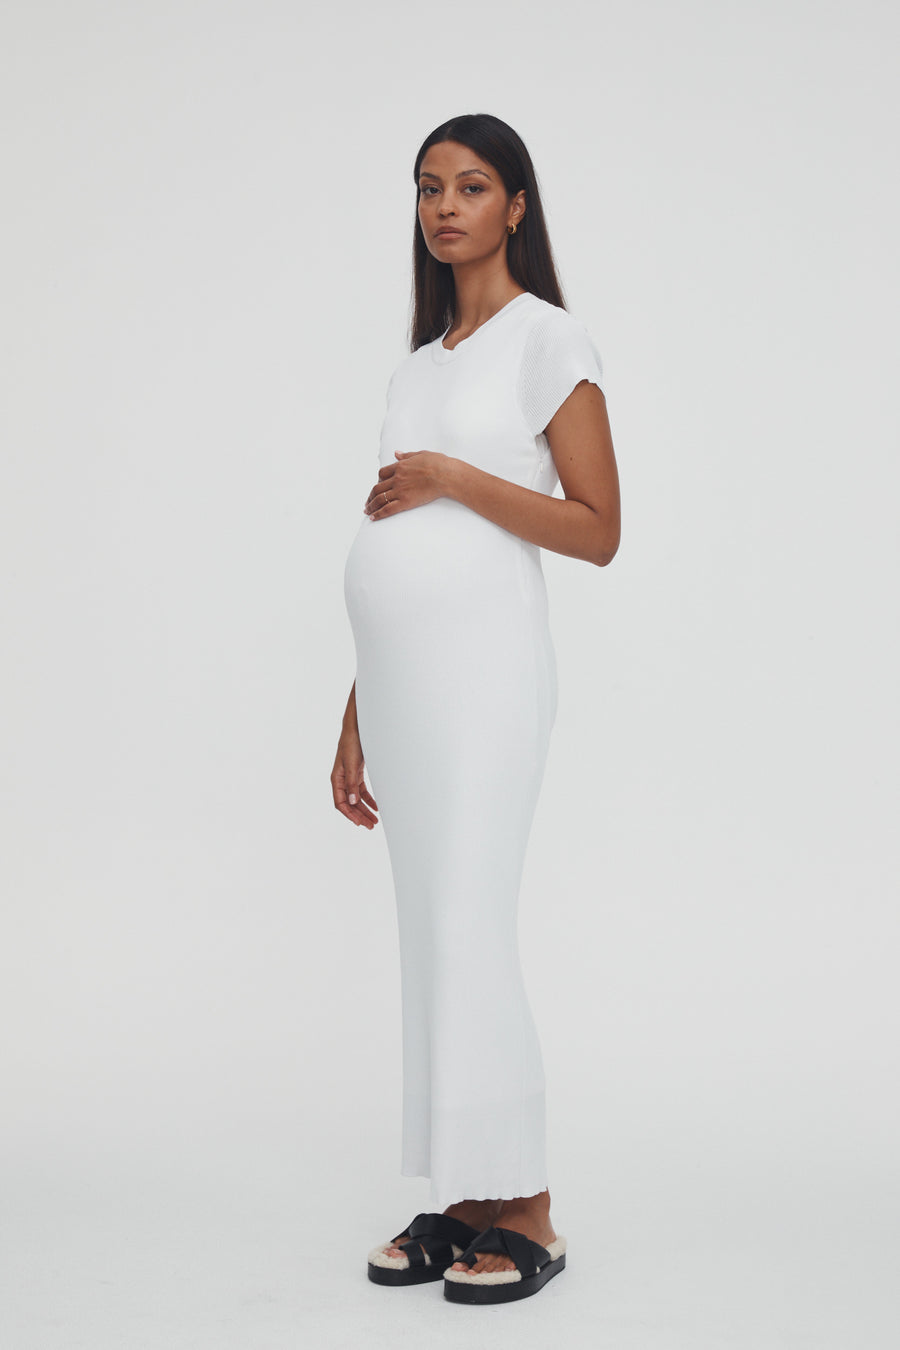 Stylish Babyshower Dress (White) 1